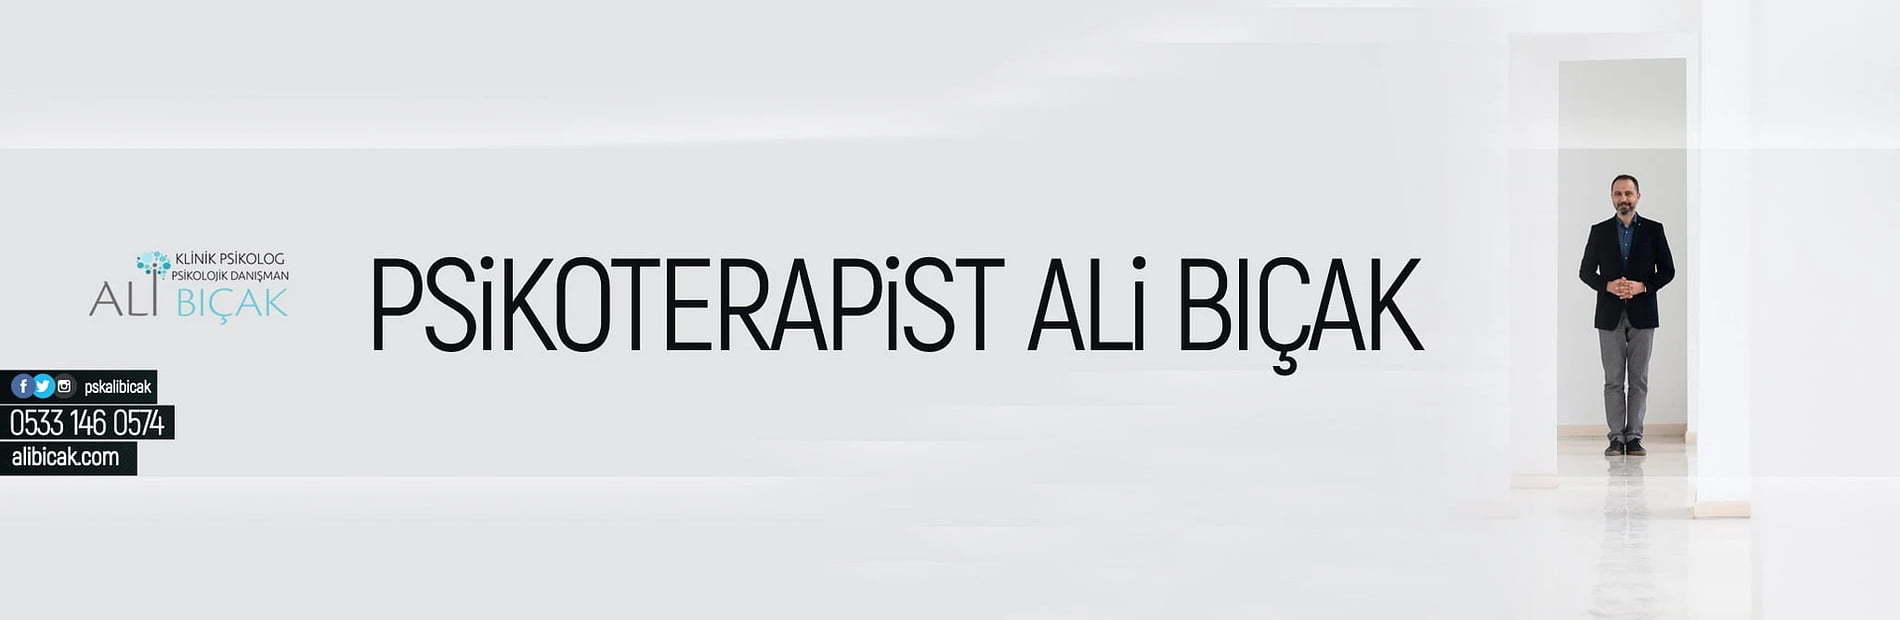 Antalya Psikolog Ali Bıçak